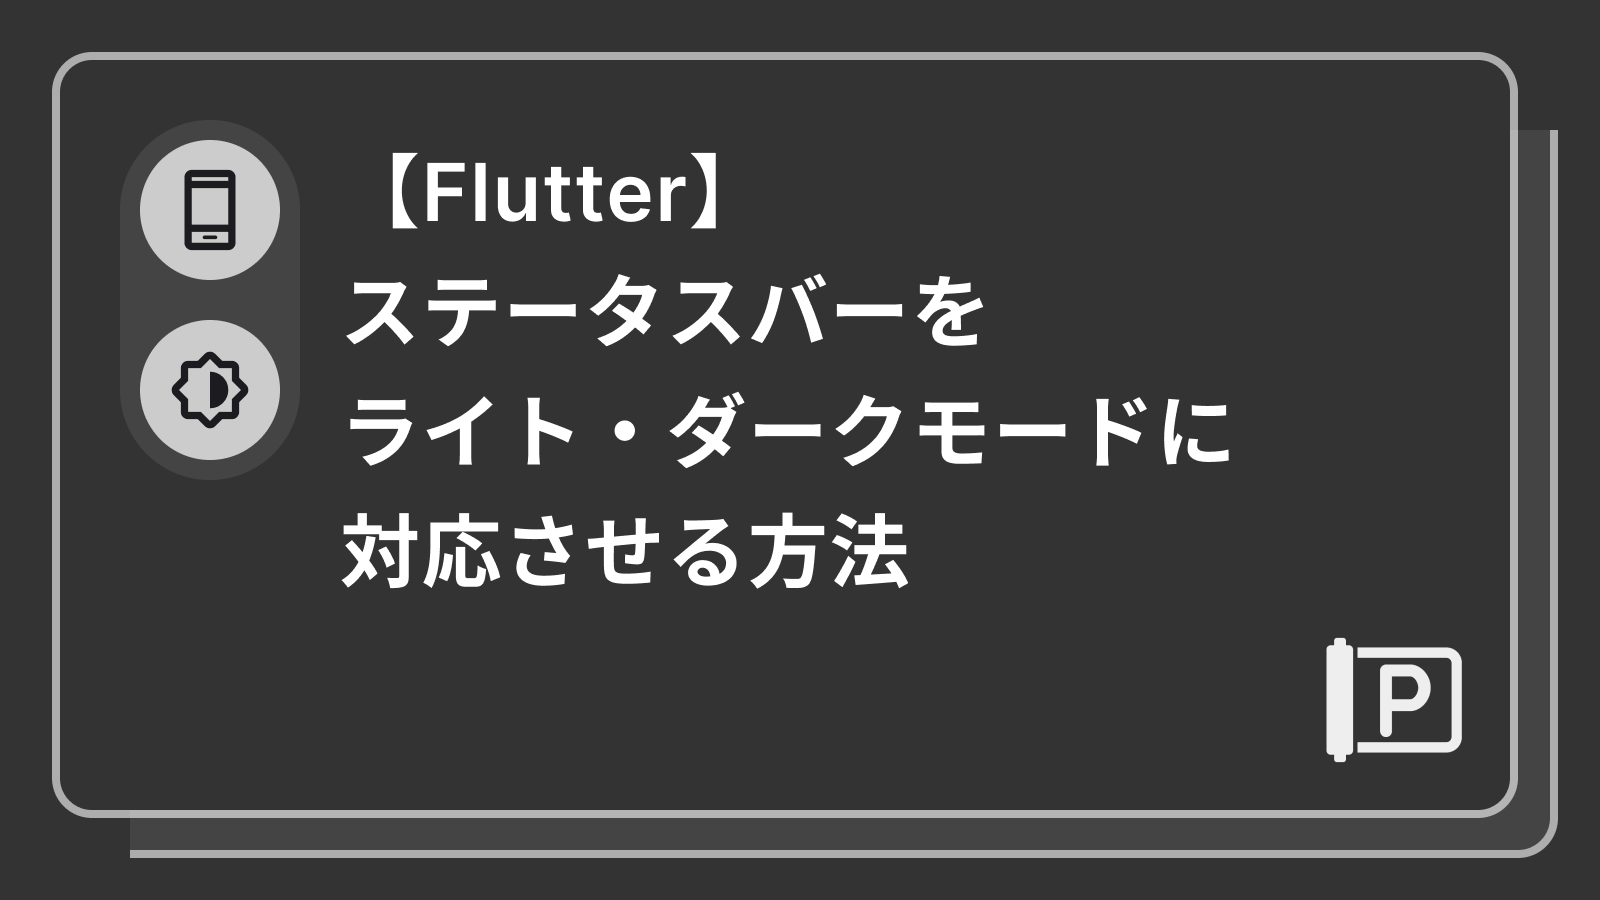 【Flutter】ステータスバーをライトモード・ダークモードに対応させる方法